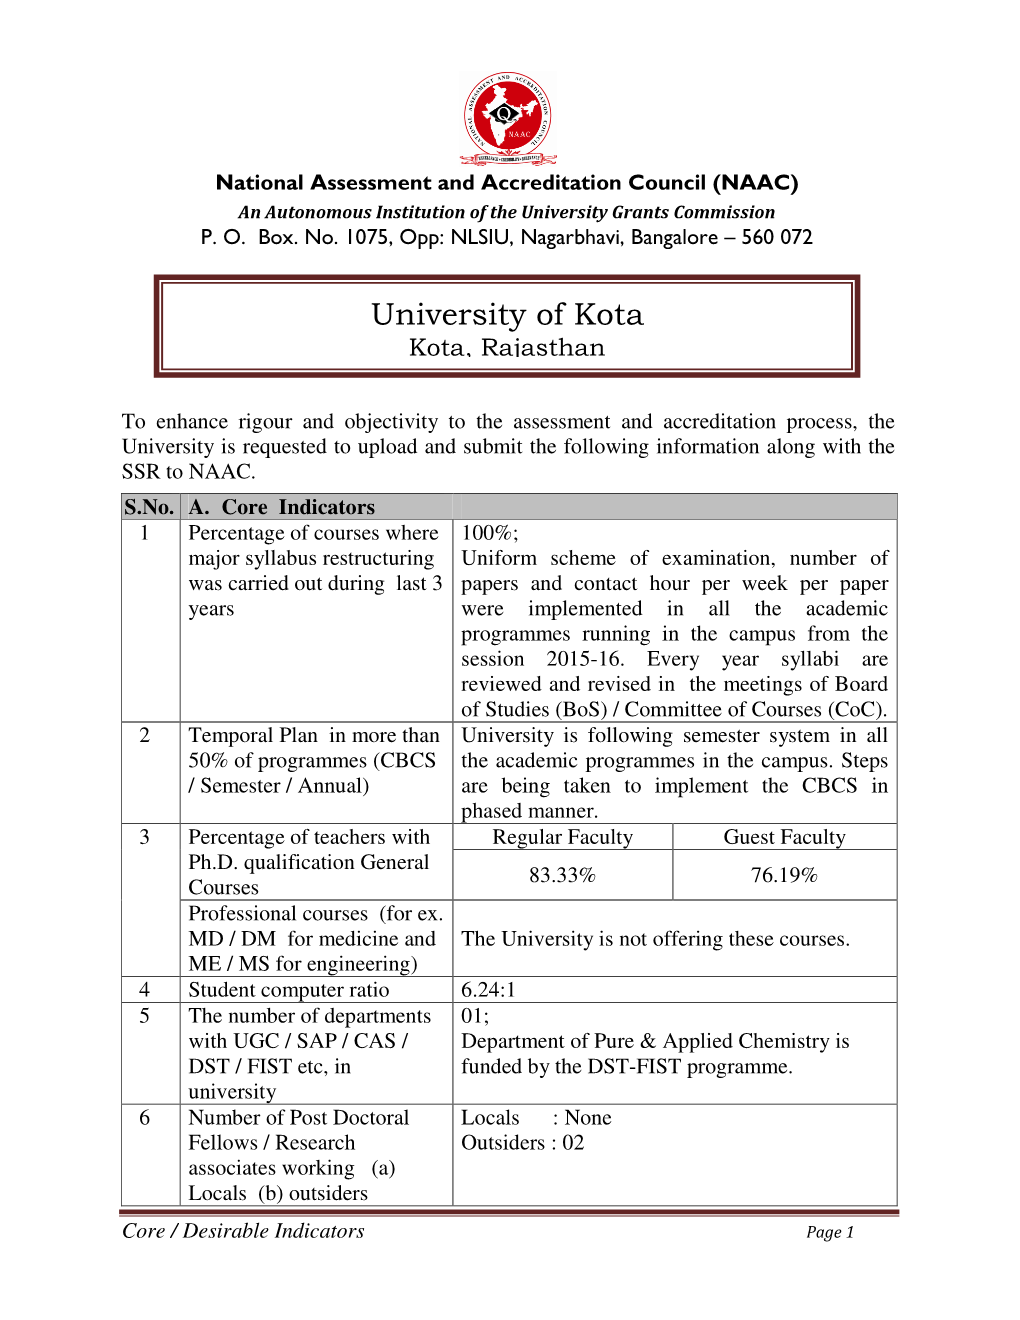 University of Kota Kota, Rajasthan